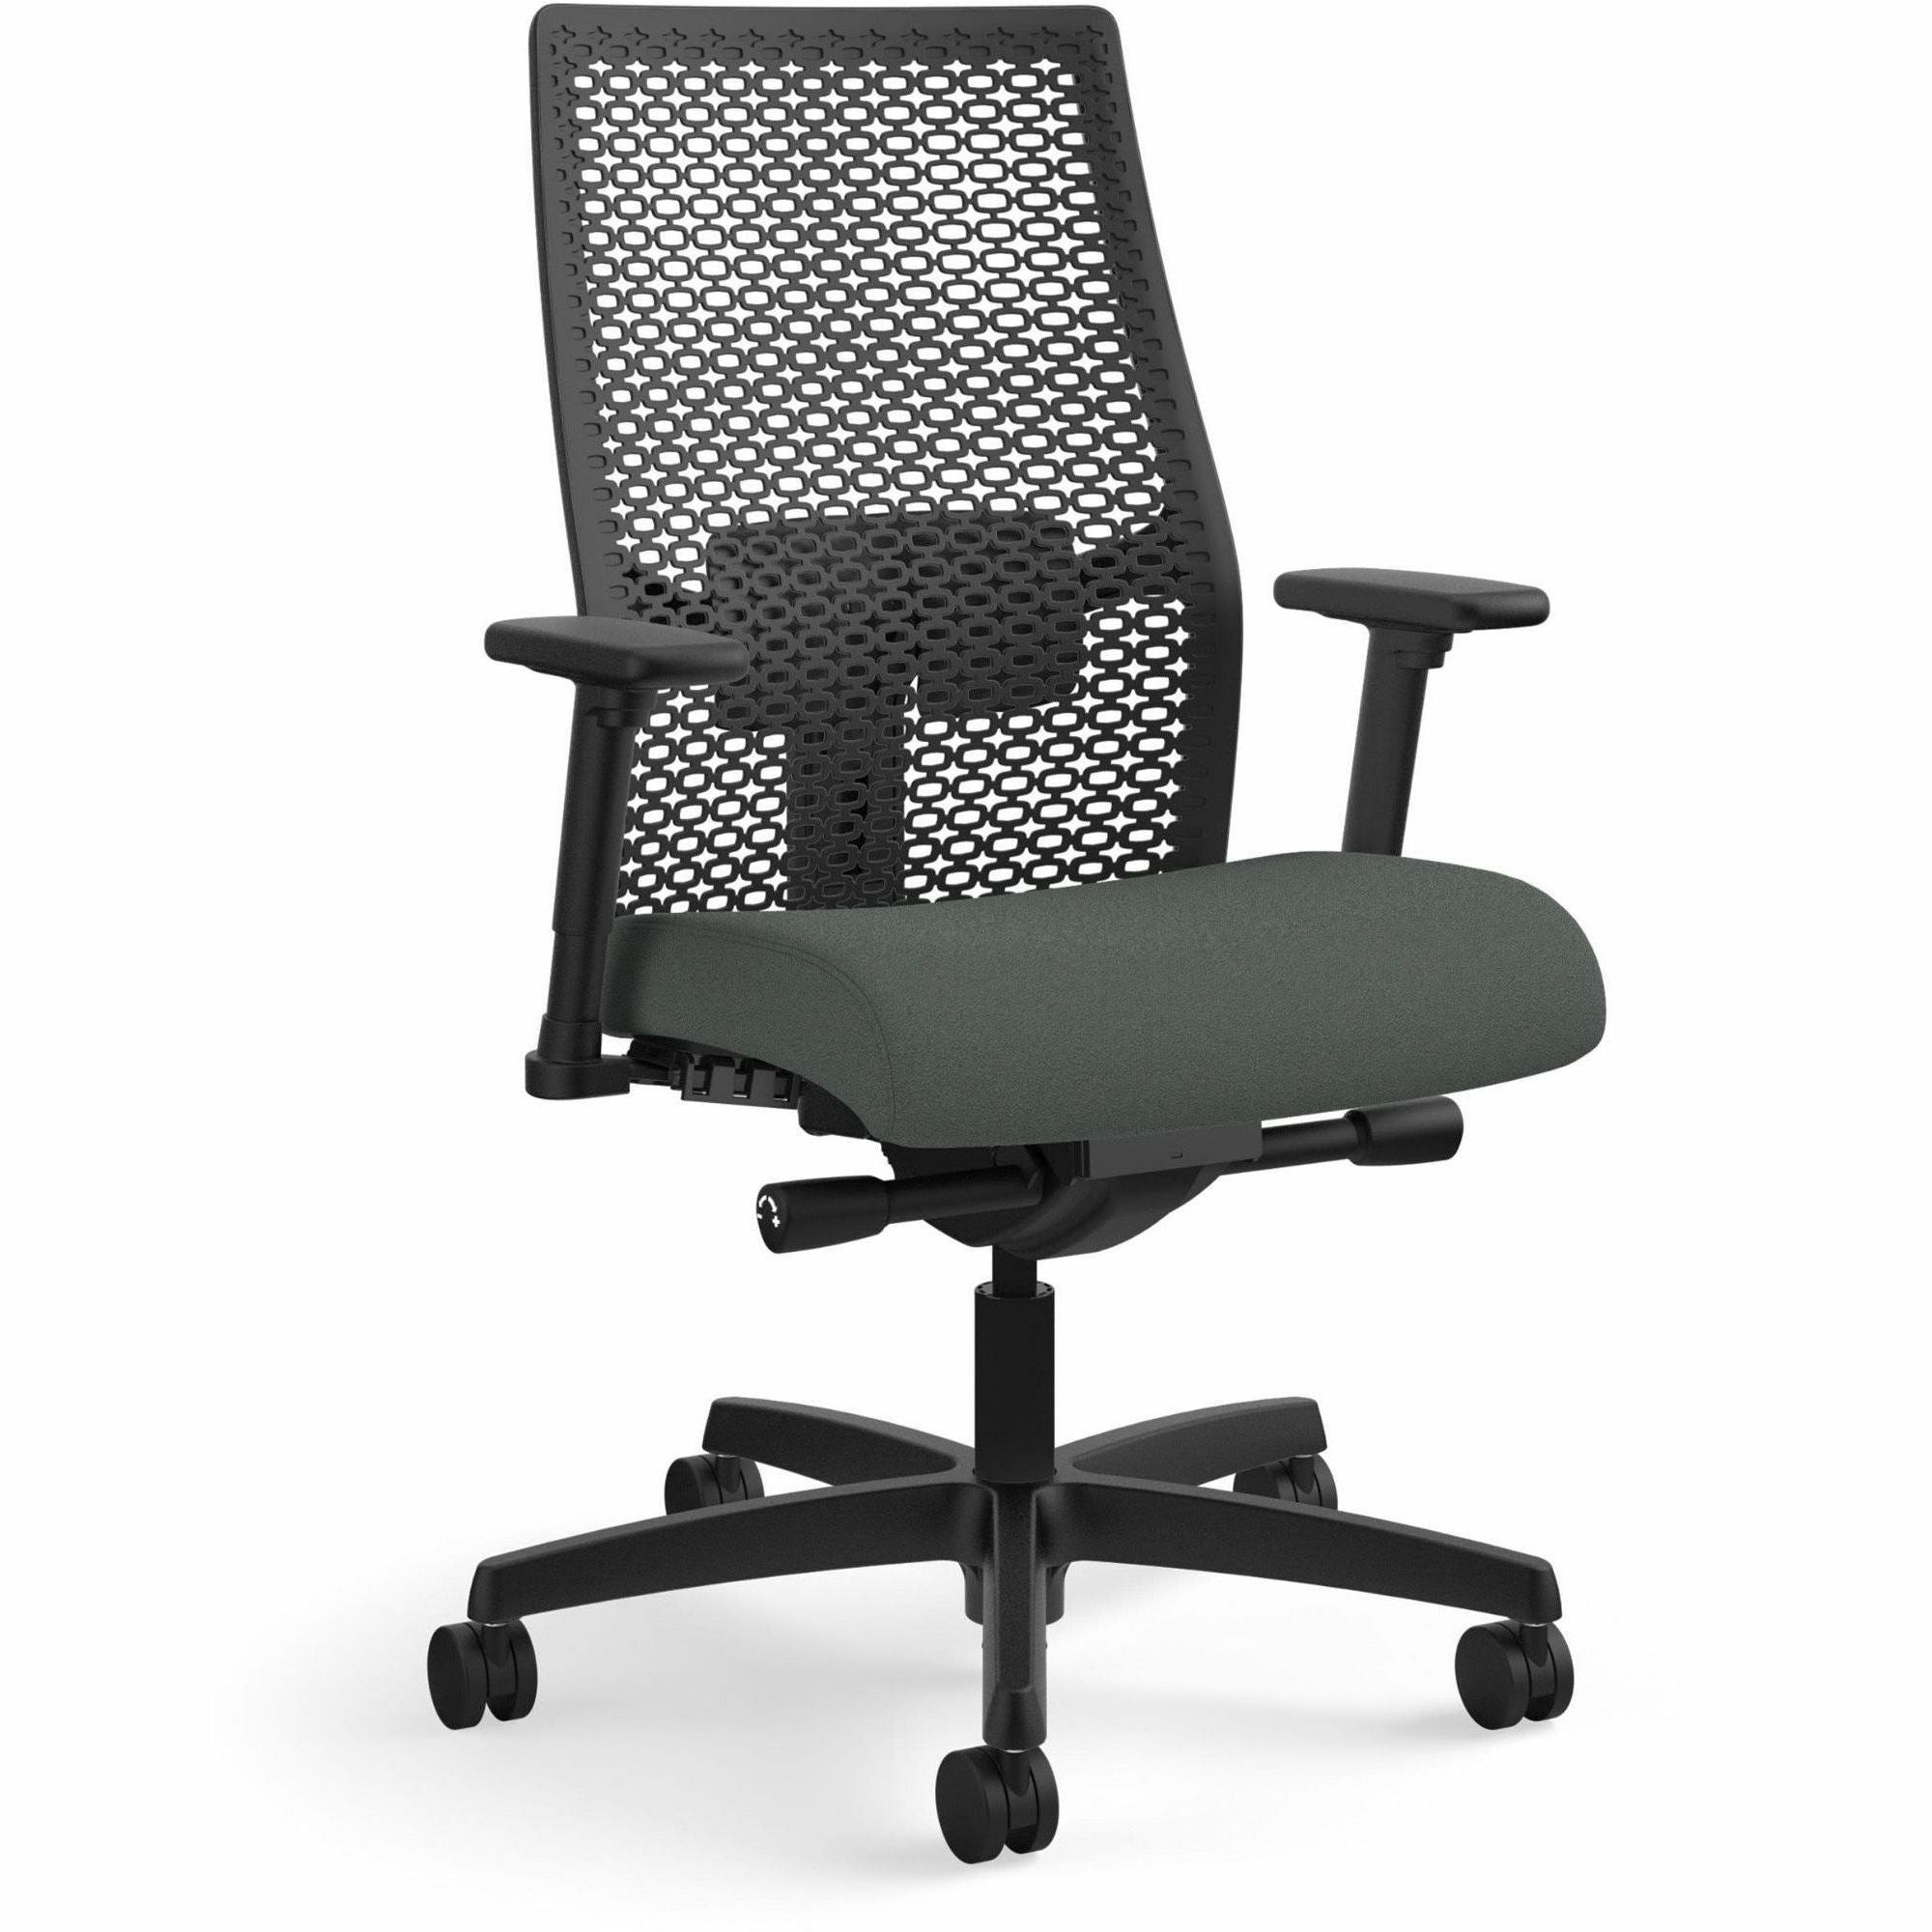 hon-ignition-reactiv-back-task-chair-fabric-seat-iron-ore-fabric-seat-black-mesh-back-black-frame-5-star-base-1-each_honiwmrak20c19b - 1